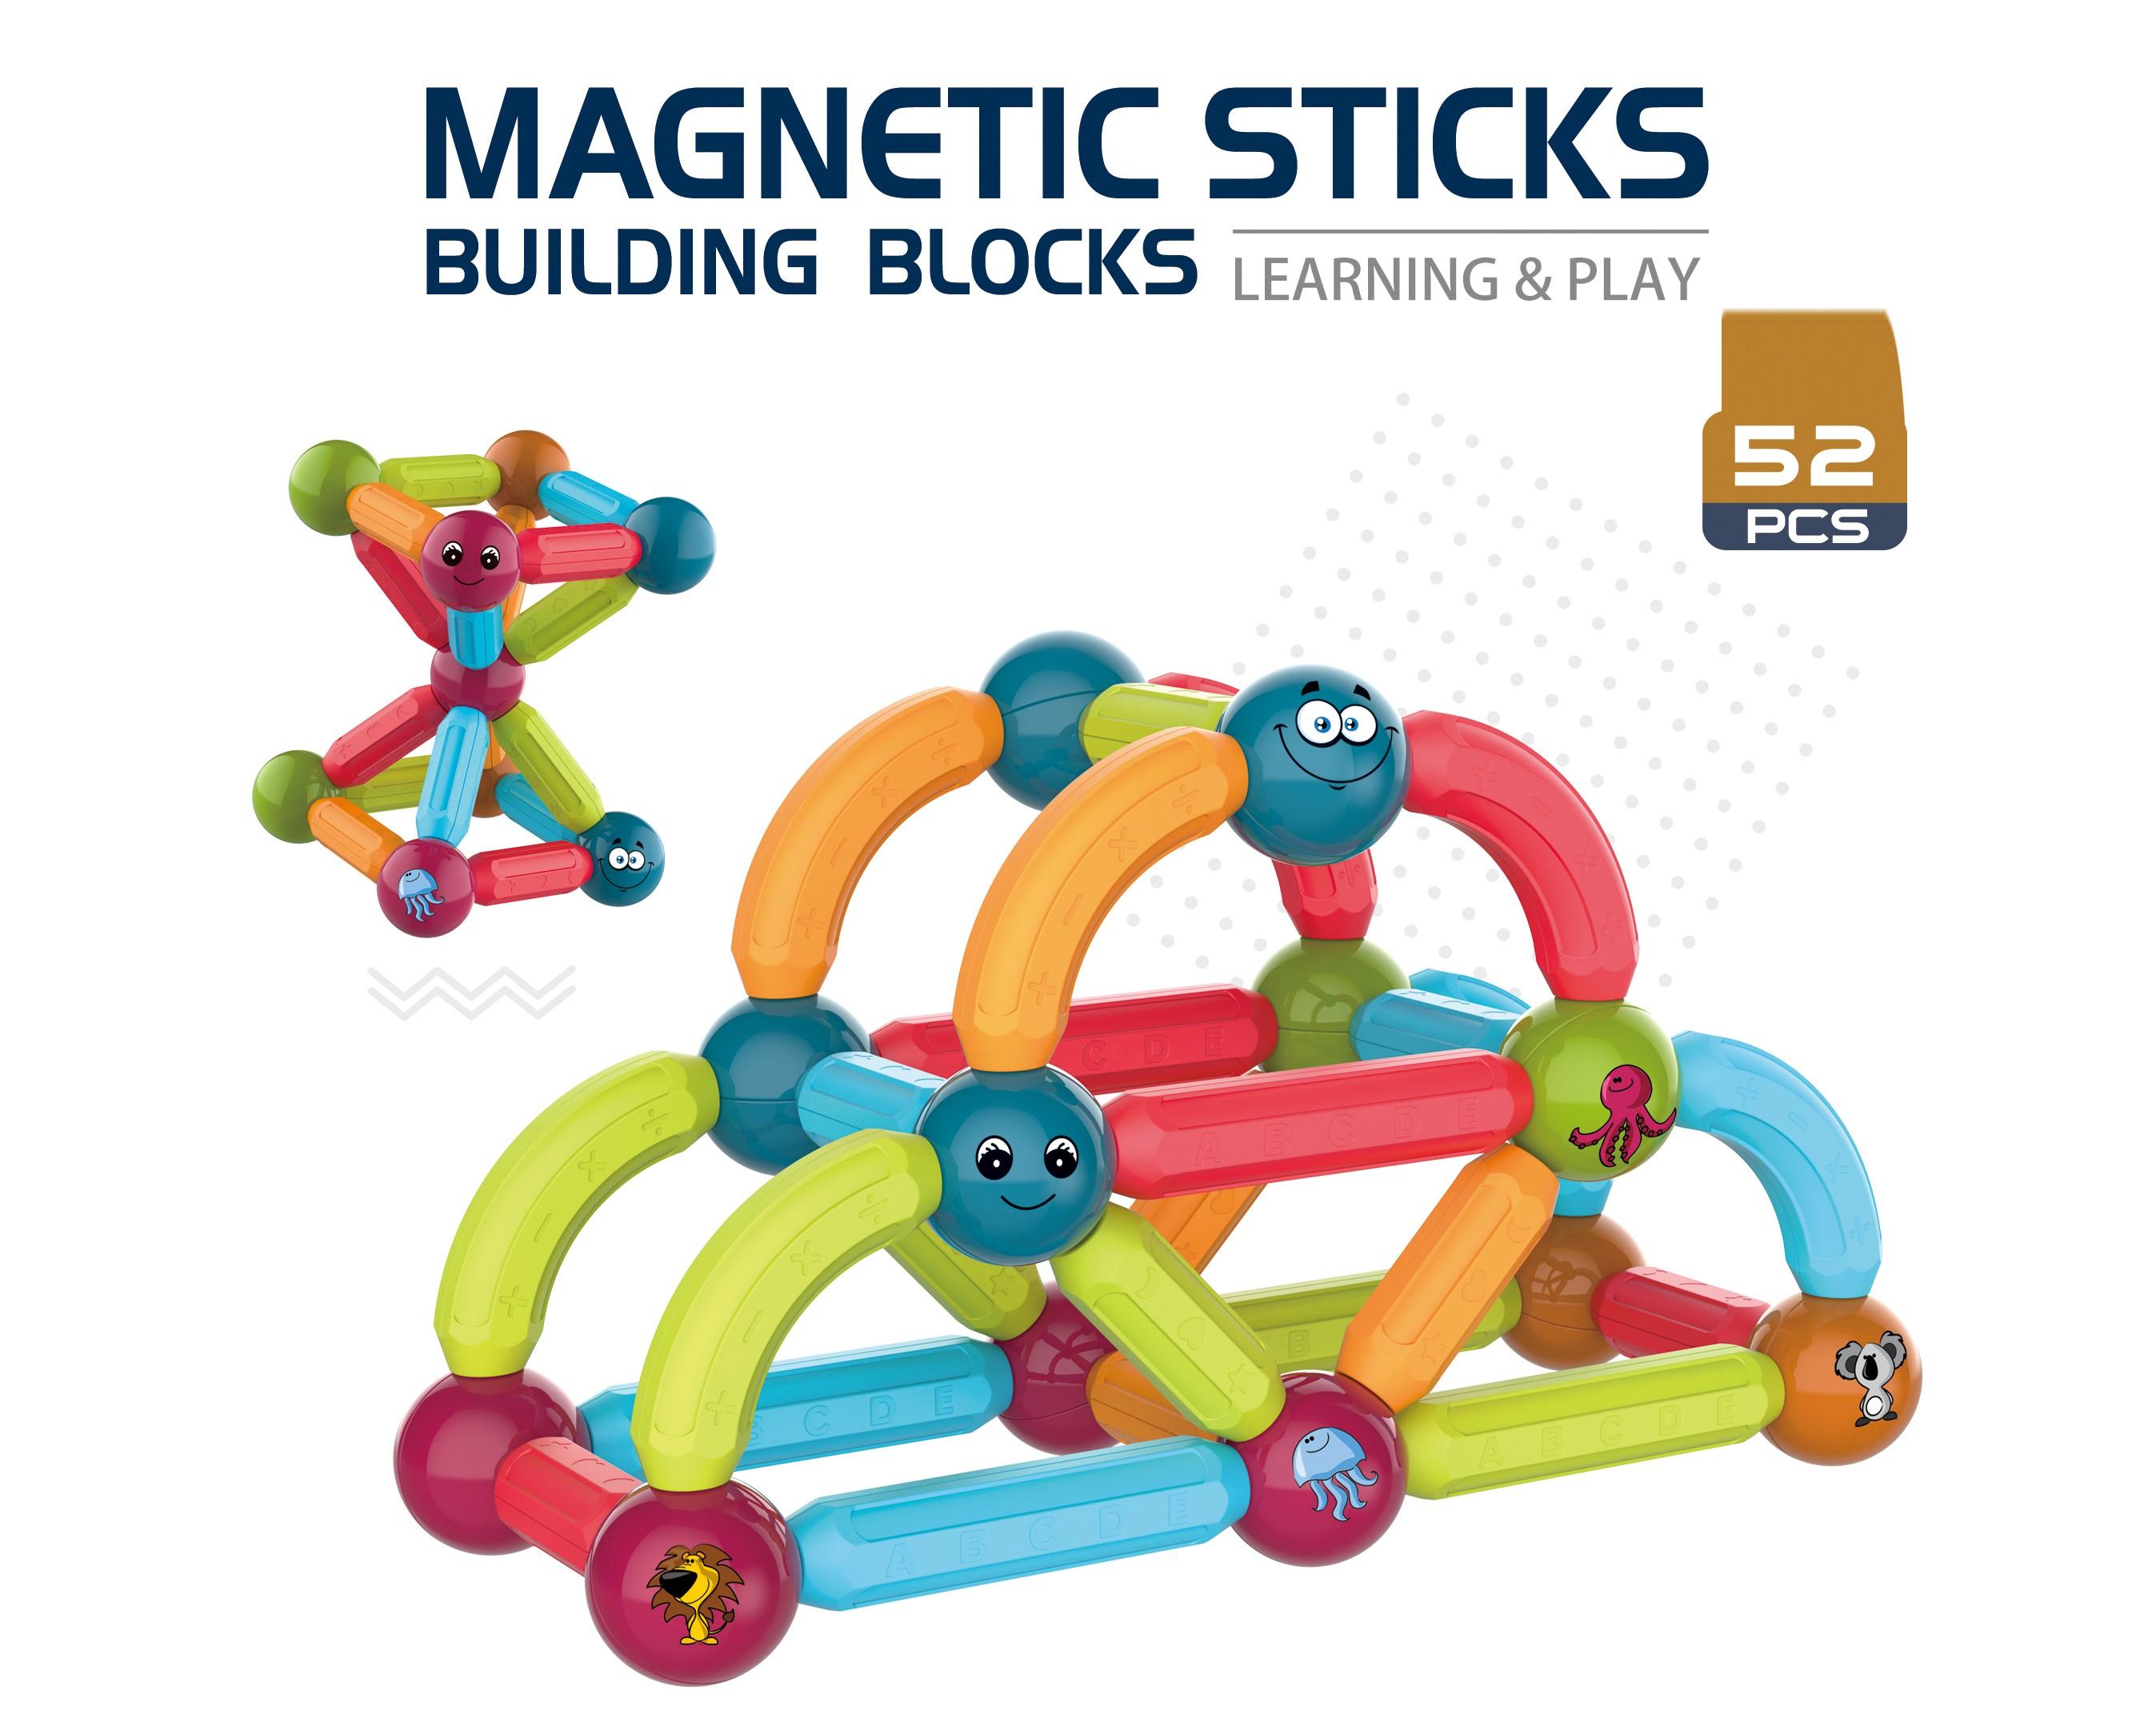 Magnetic building blocks - set of 52 elements